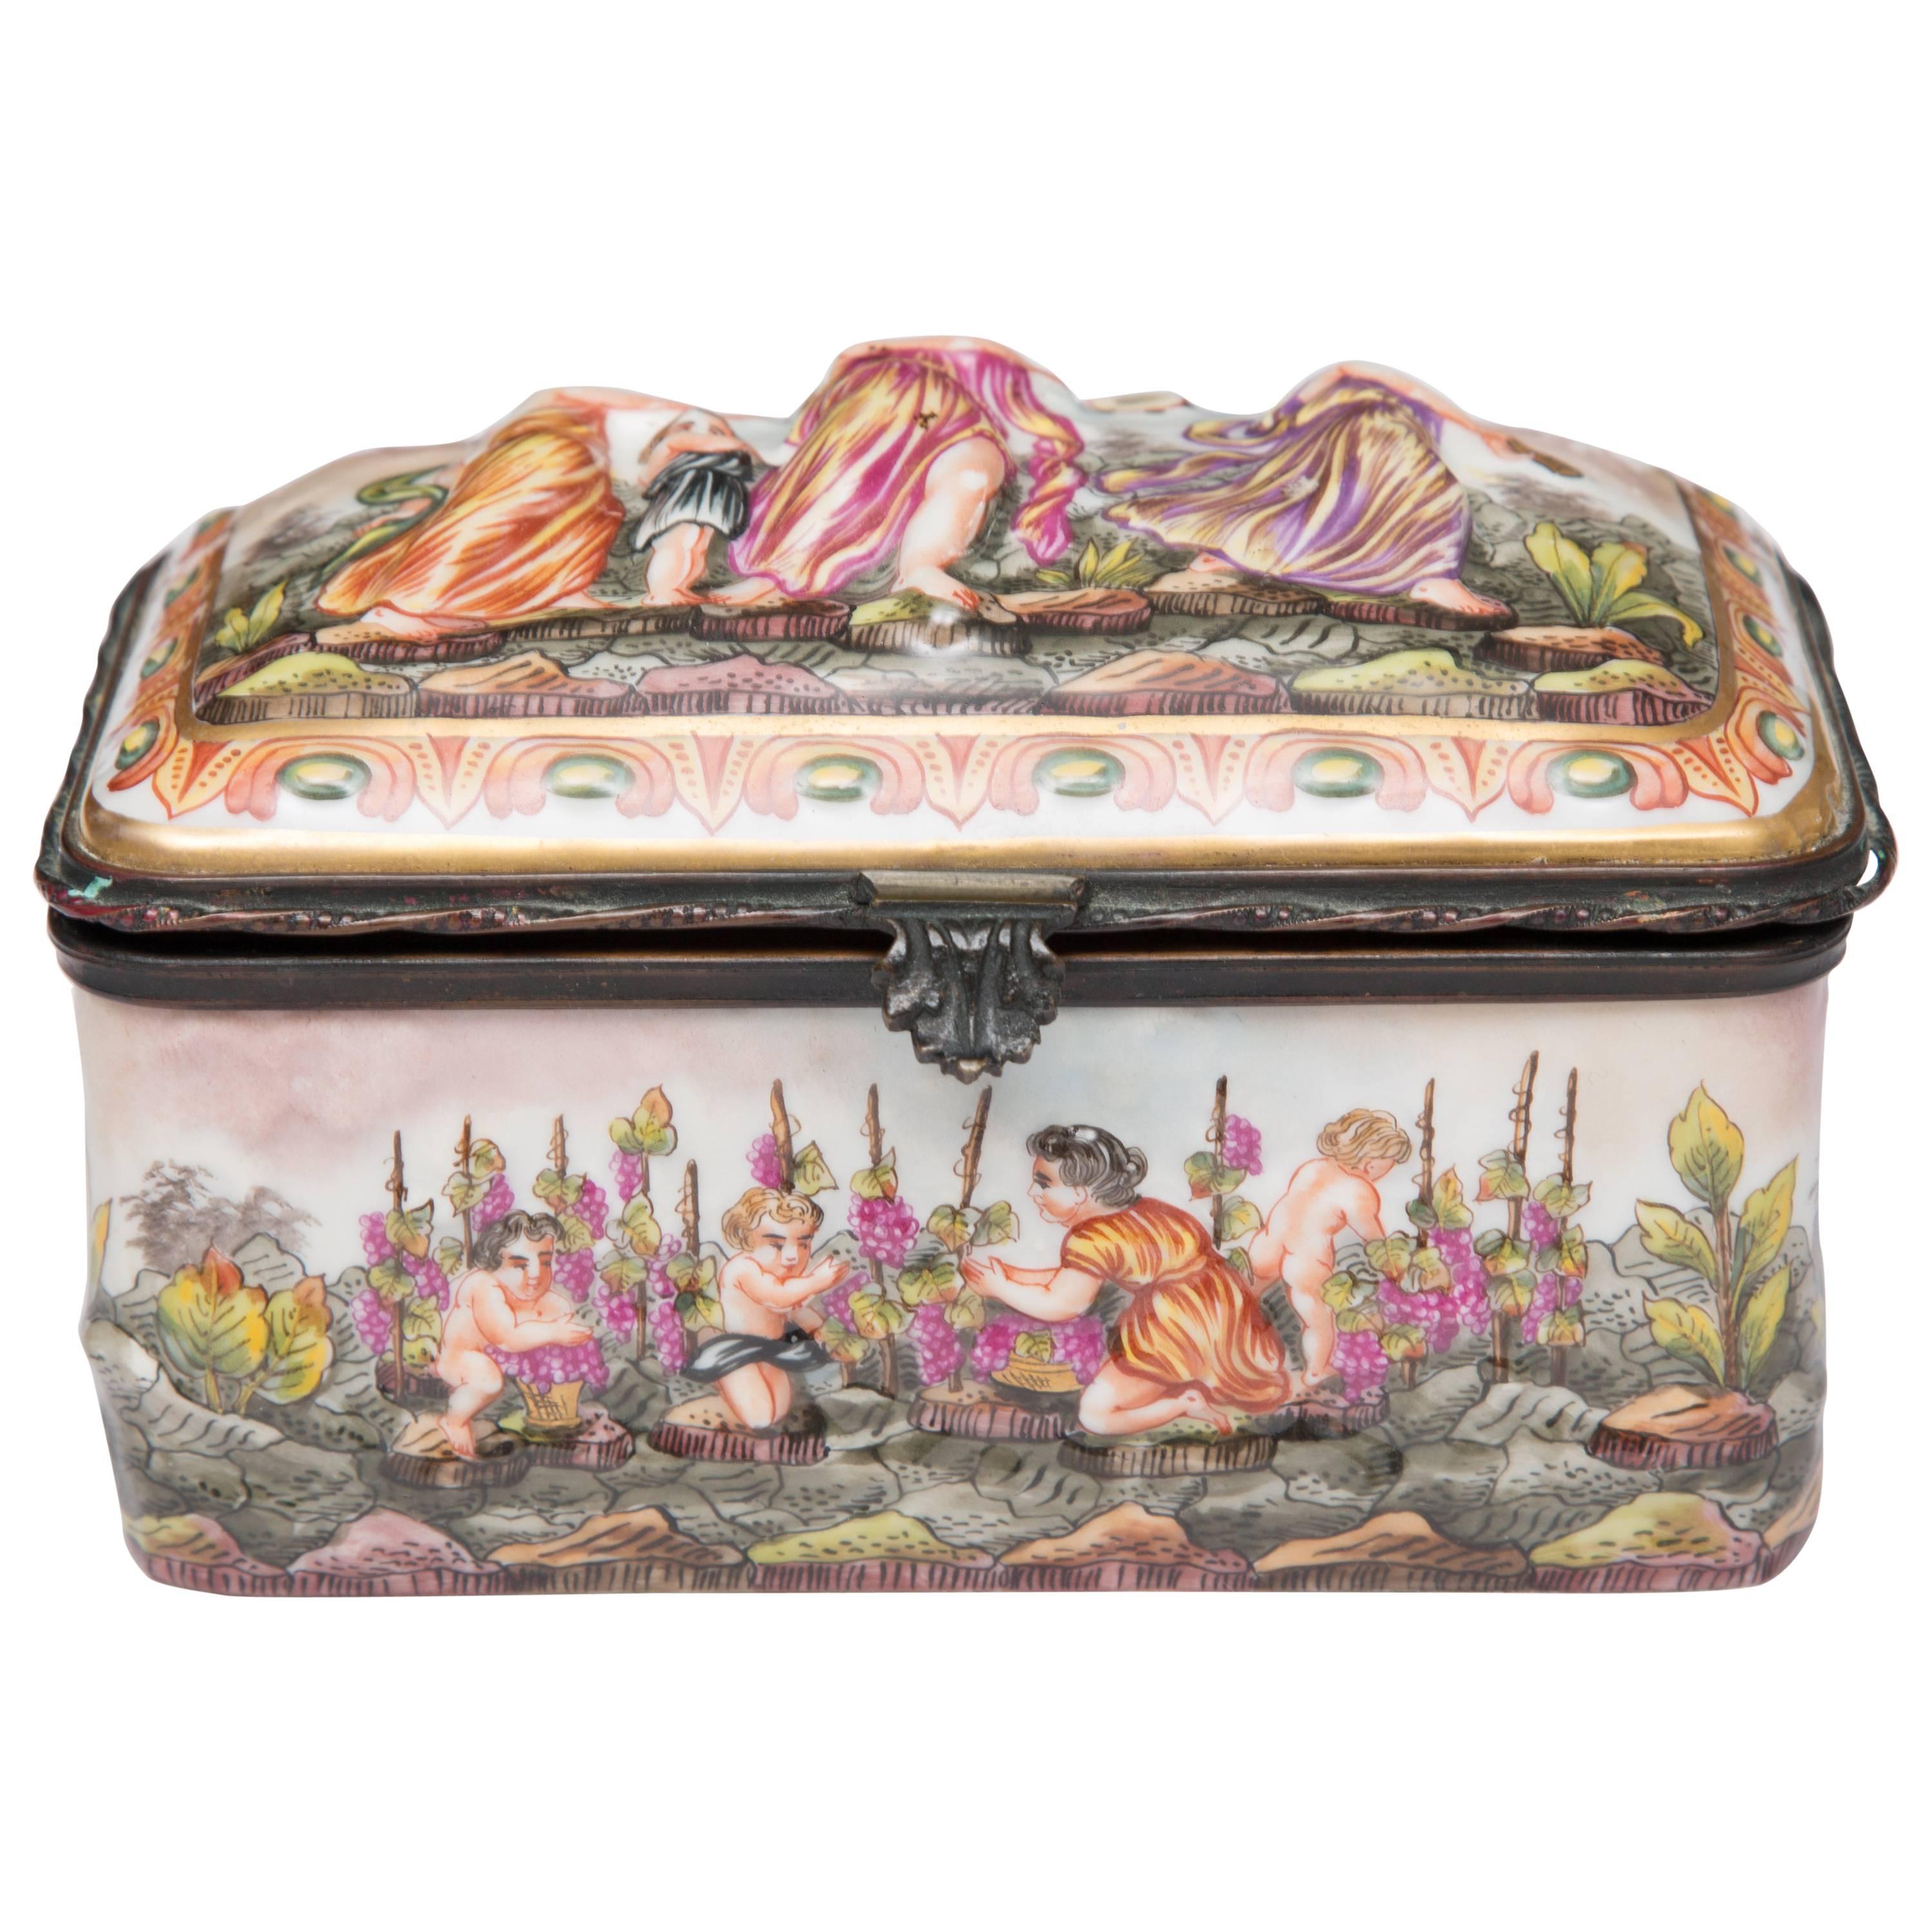 Capodimonte Porcelain Decorated Lidded Box